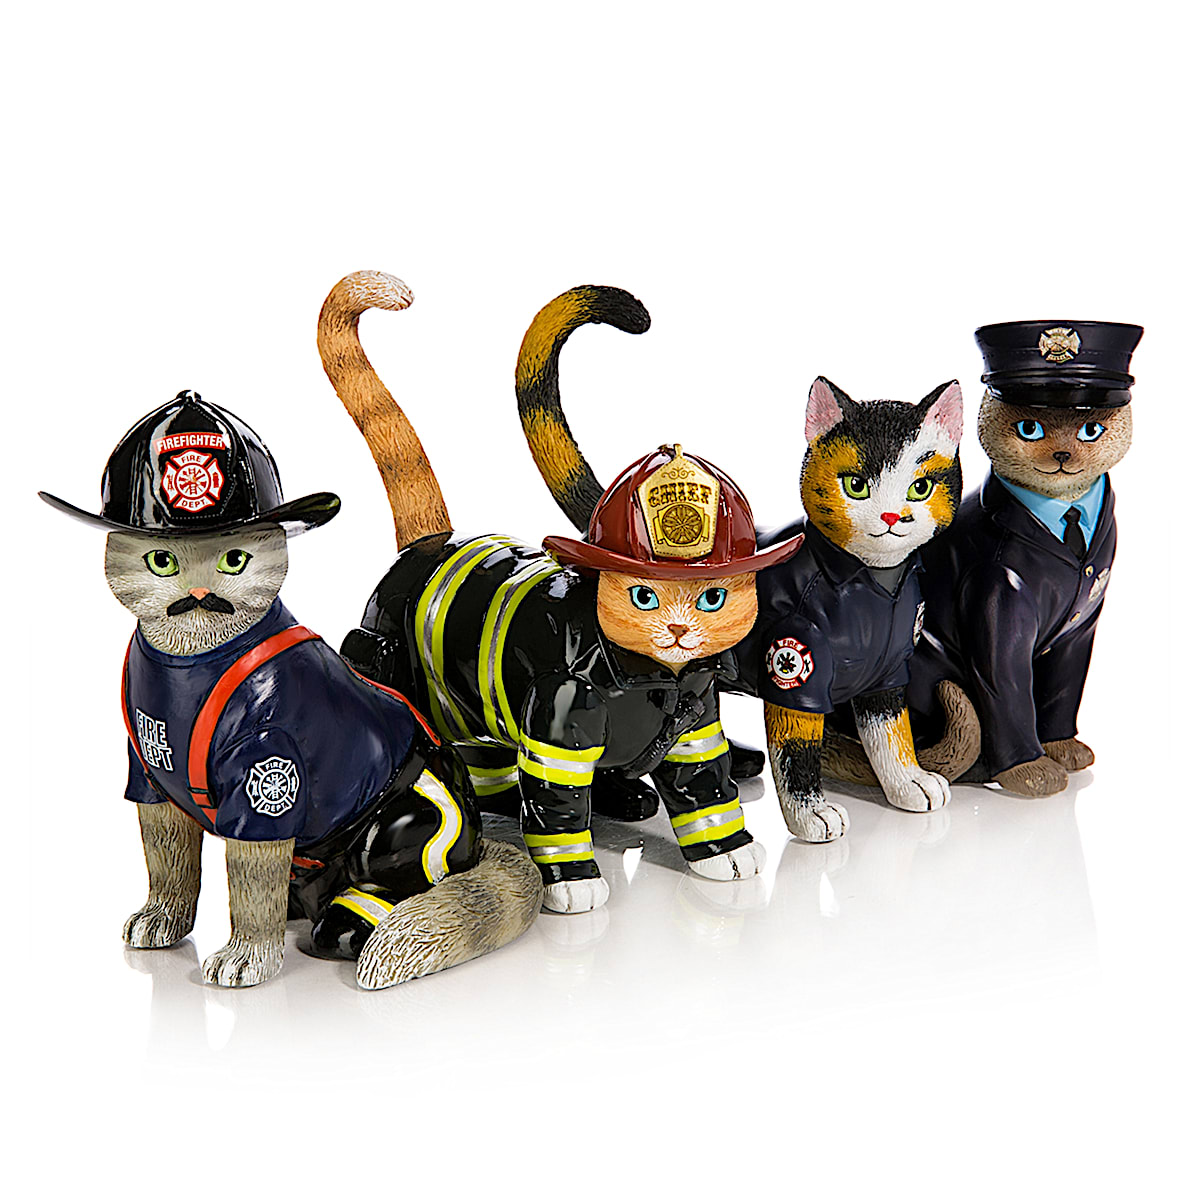 https://media.hamiltoncollection.com/images/d_ham_defaultImage.png/w_1200,h_1200,q_auto,f_auto,dpr_1,e_sharpen:100/subplan-and-parent/909198/%22Furr-ever-Firefighter%22-Cat-Figurine-Collection